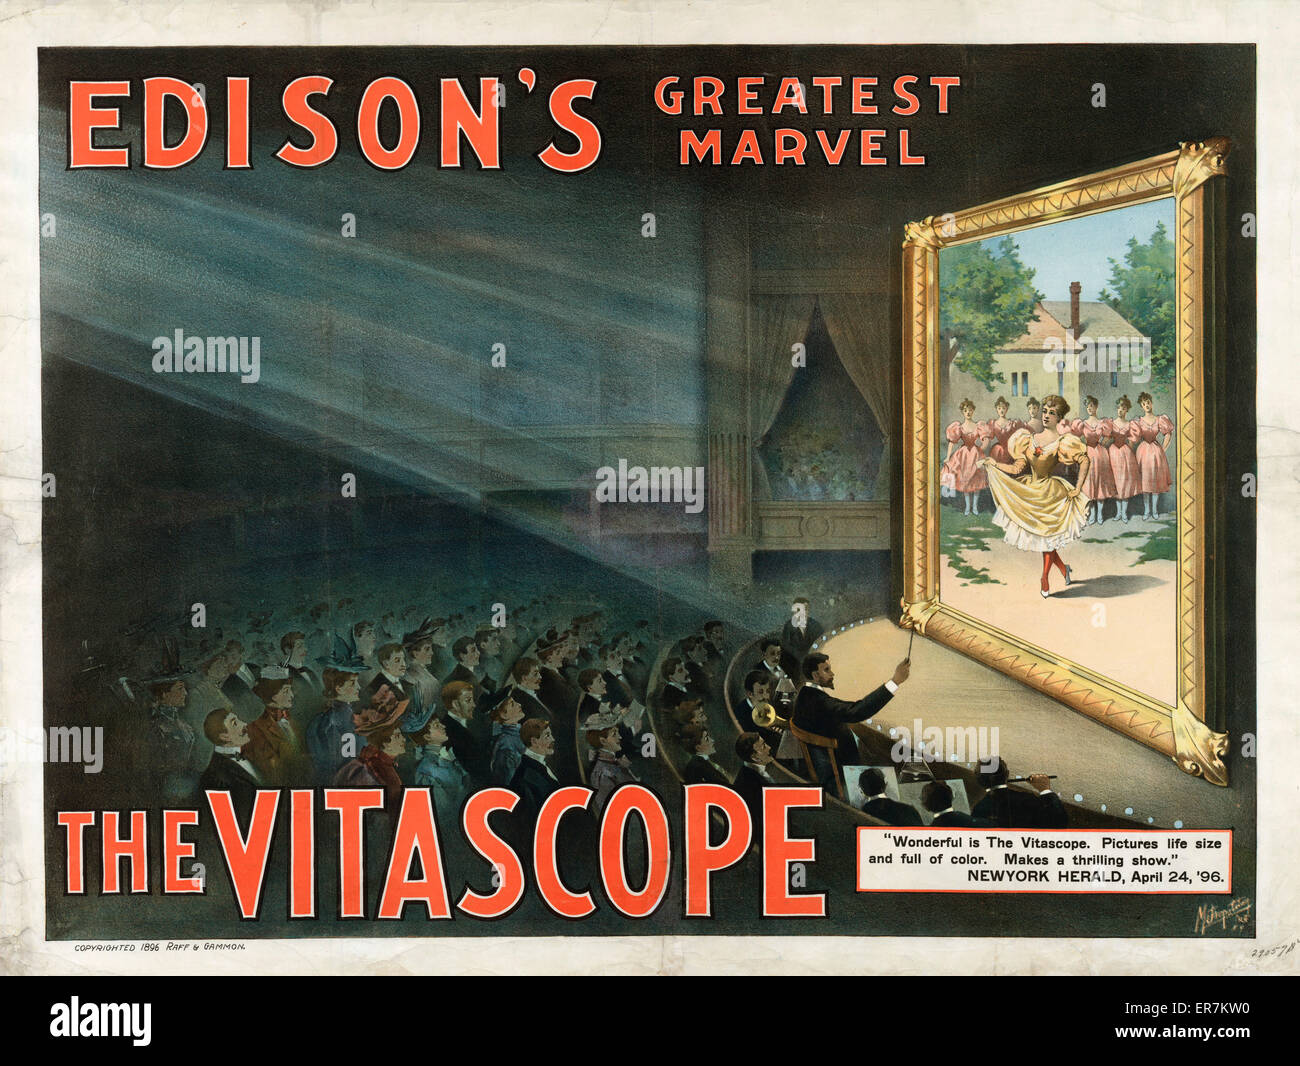 Edison's greatest marvel - The Vitascope Stock Photo